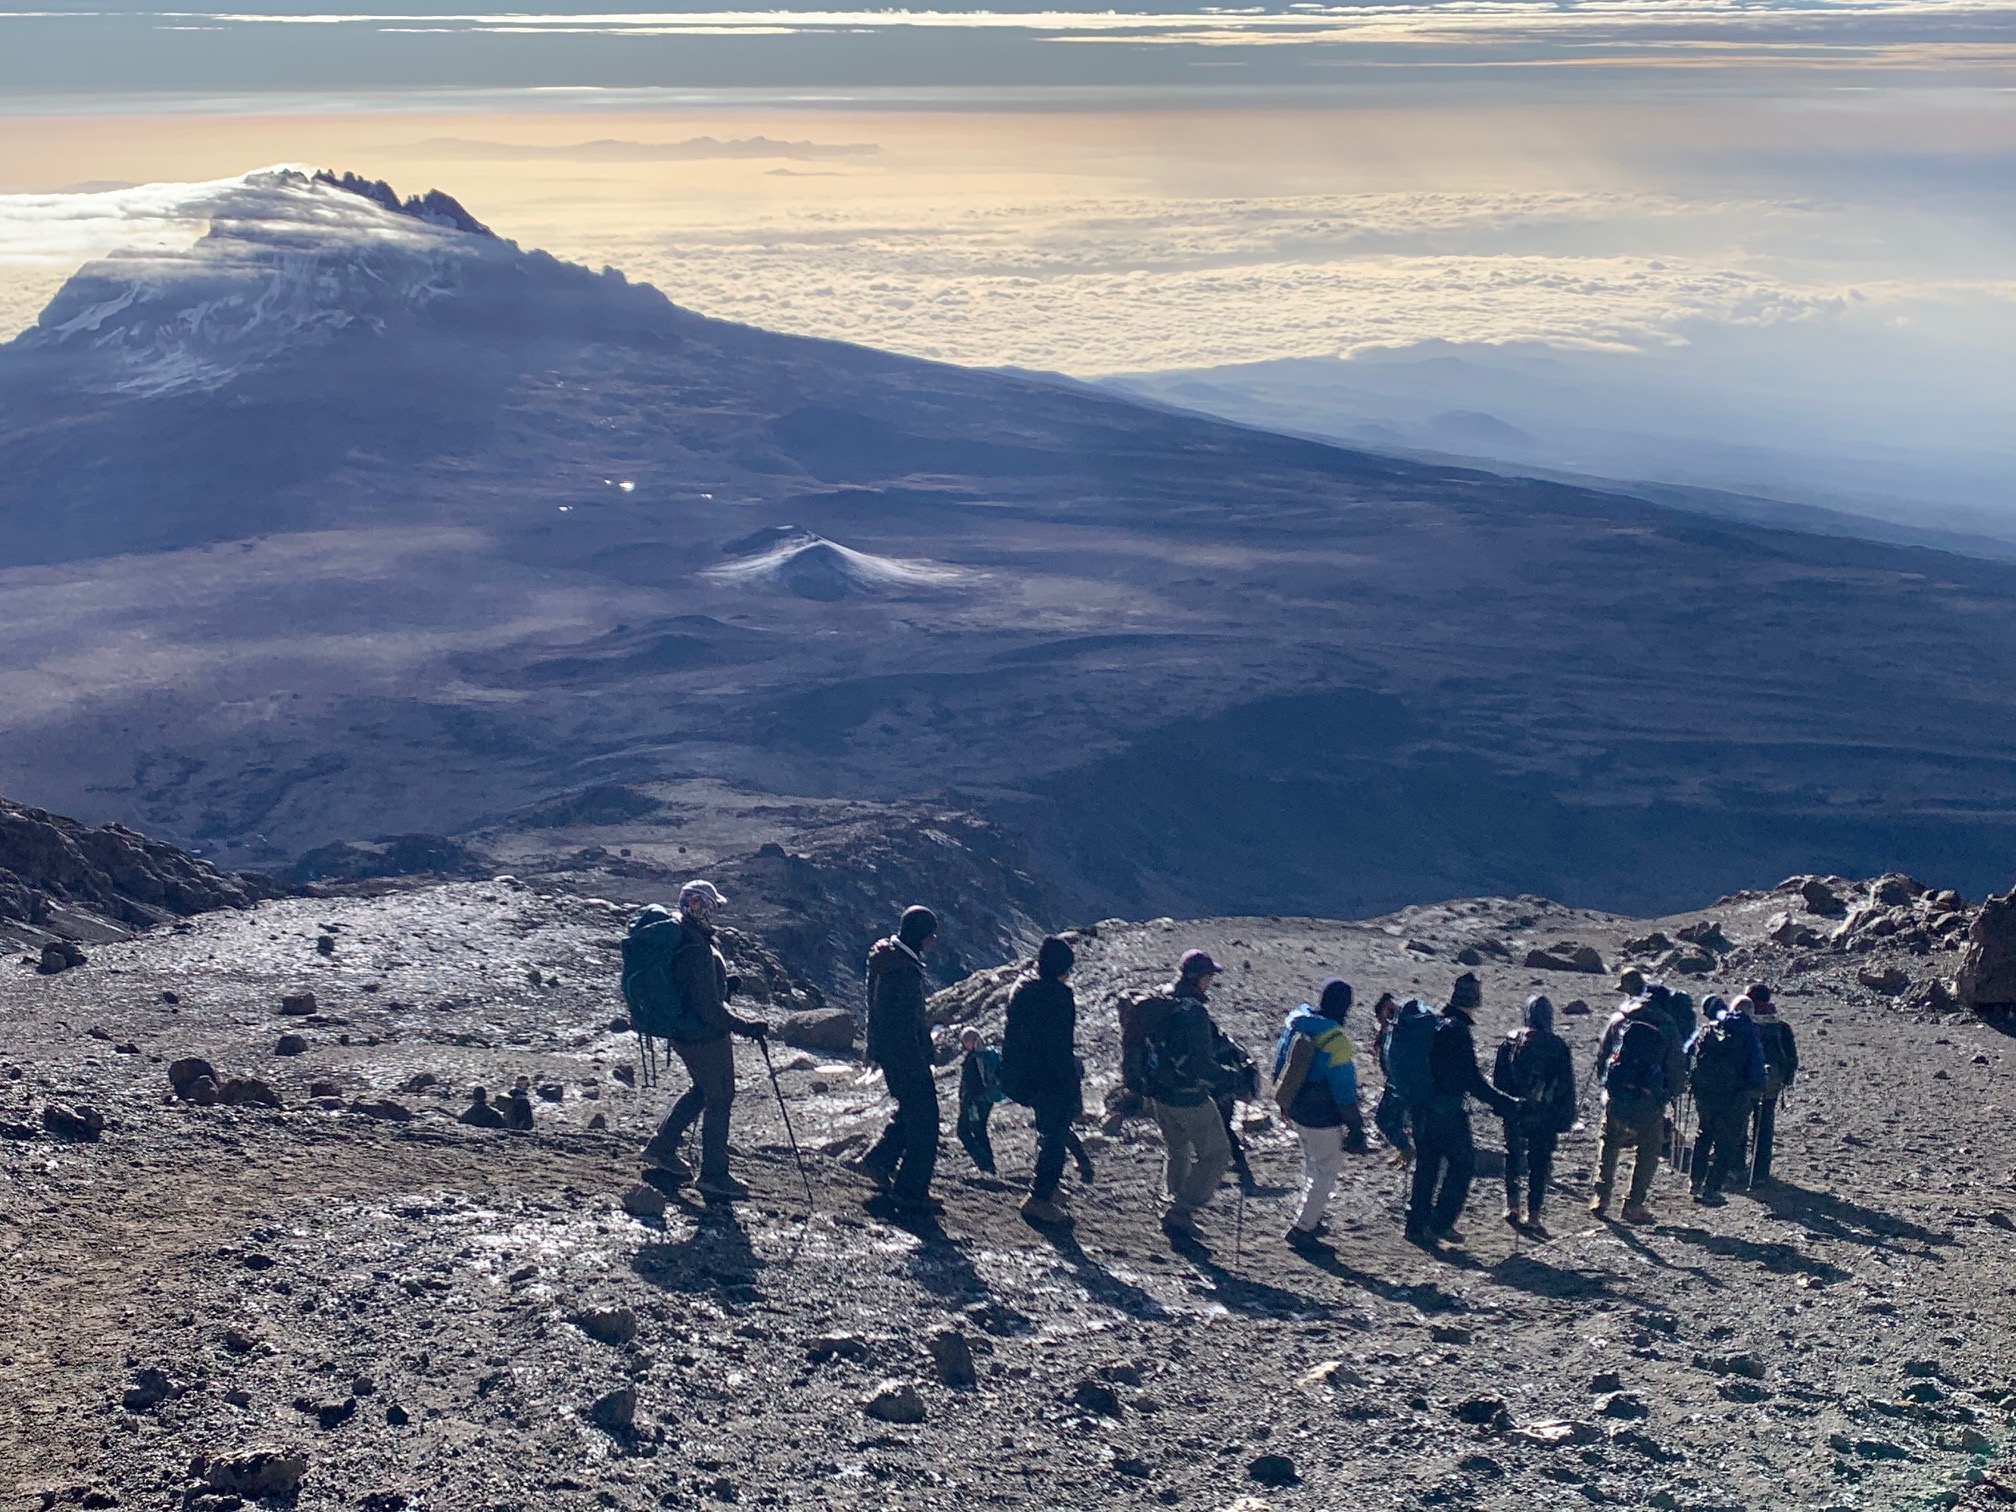 The long descent down Kilimanjaro